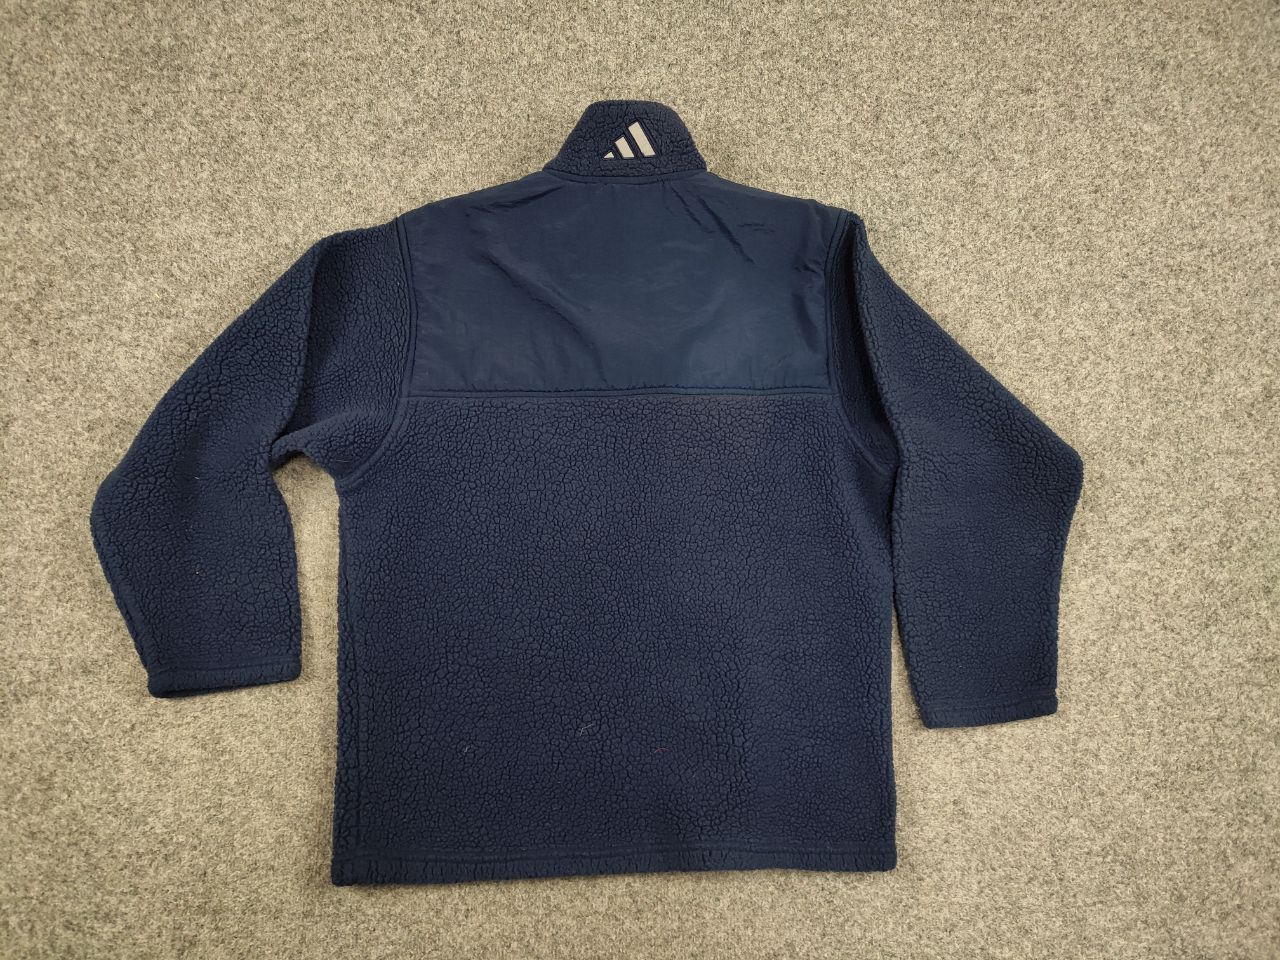 Adidas Vintage 90's Adidas Teddy Fleece Dark Zip Pullover Jacket Size US M / EU 48-50 / 2 - 6 Thumbnail